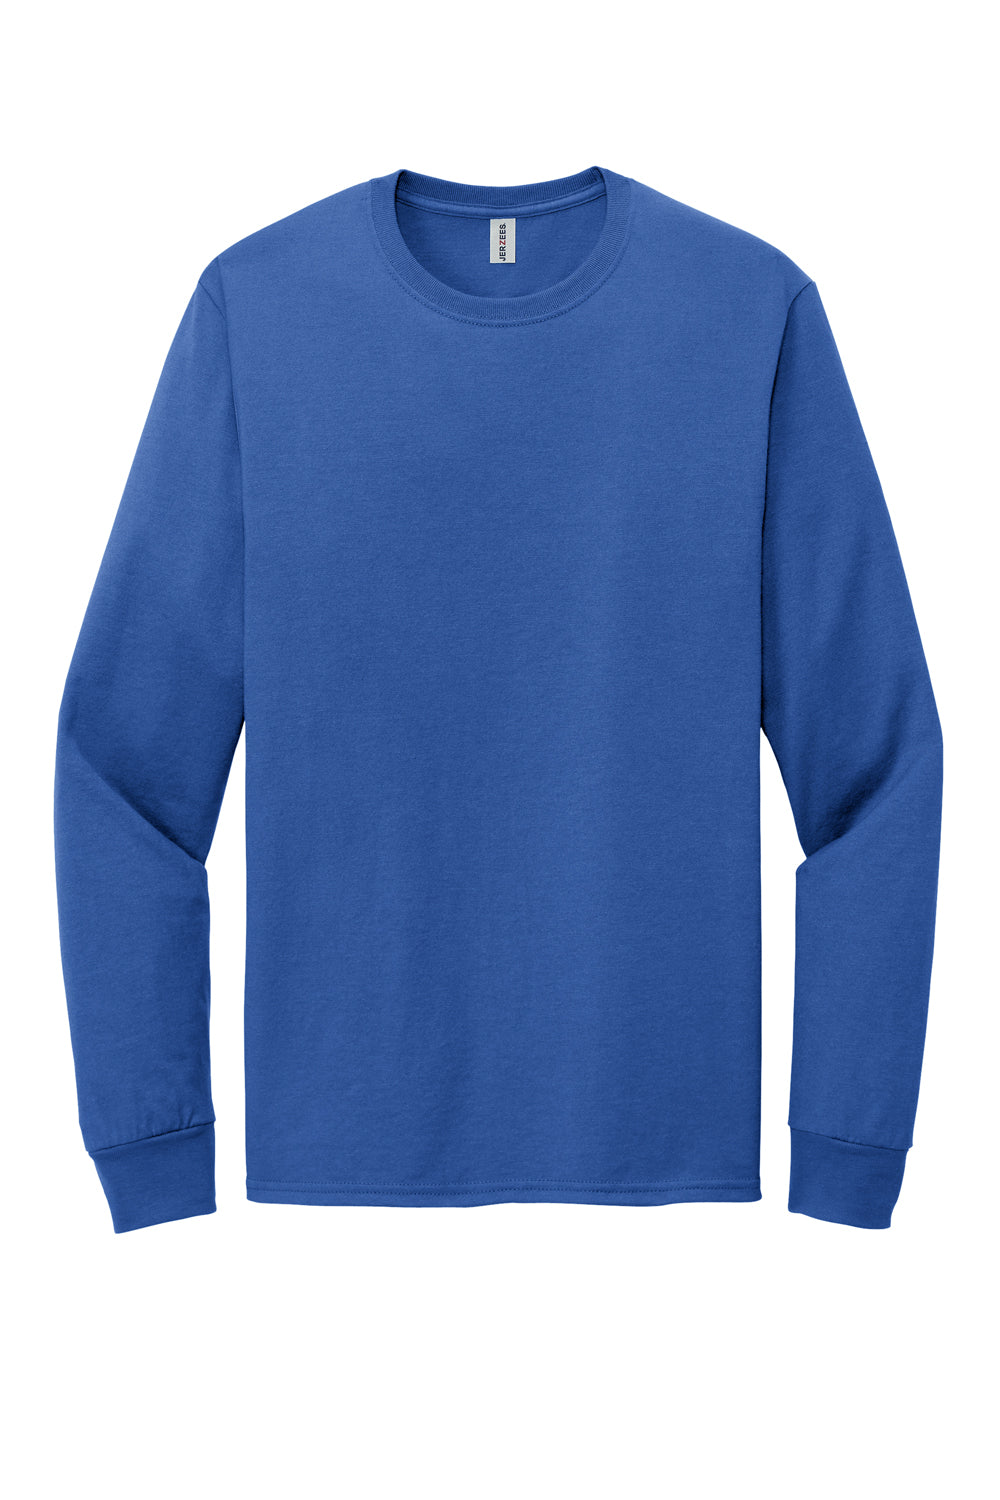 Jerzees 560LS Mens Premium Blend Ring Spun Long Sleeve Crewneck T-Shirt Royal Blue Flat Front